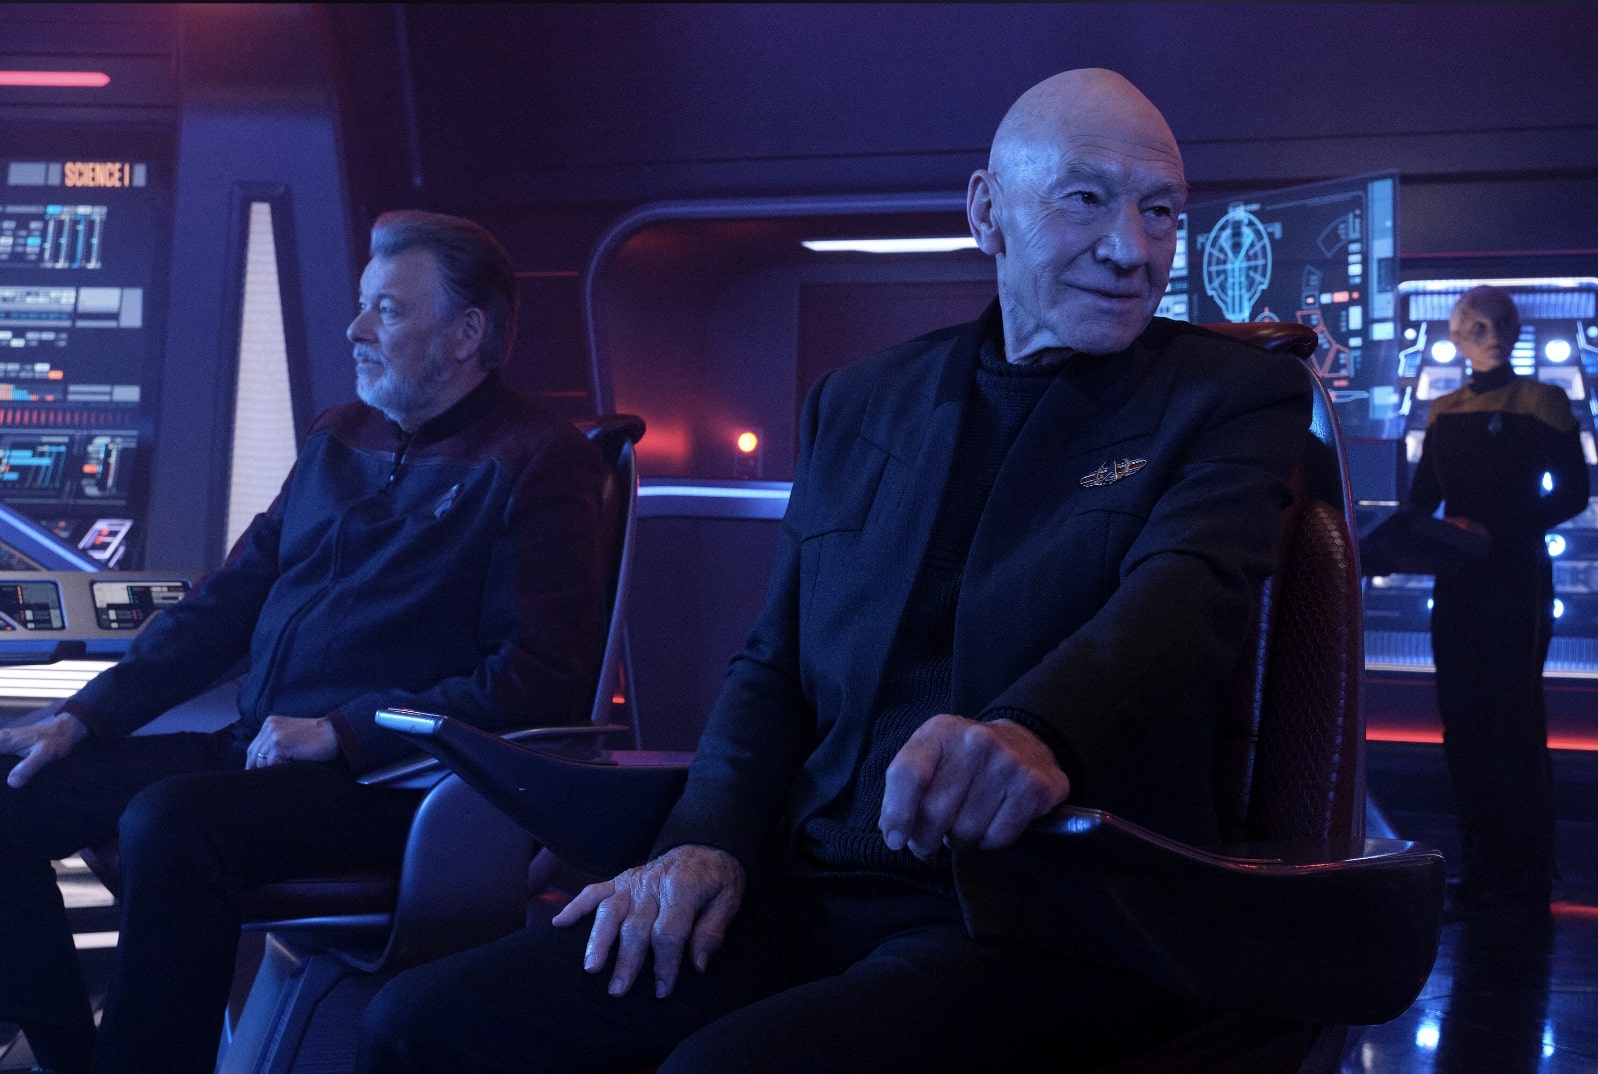 'Picard' S3E4 'No Win Scenario' sees a Star Trek ship stuck in a gravity well